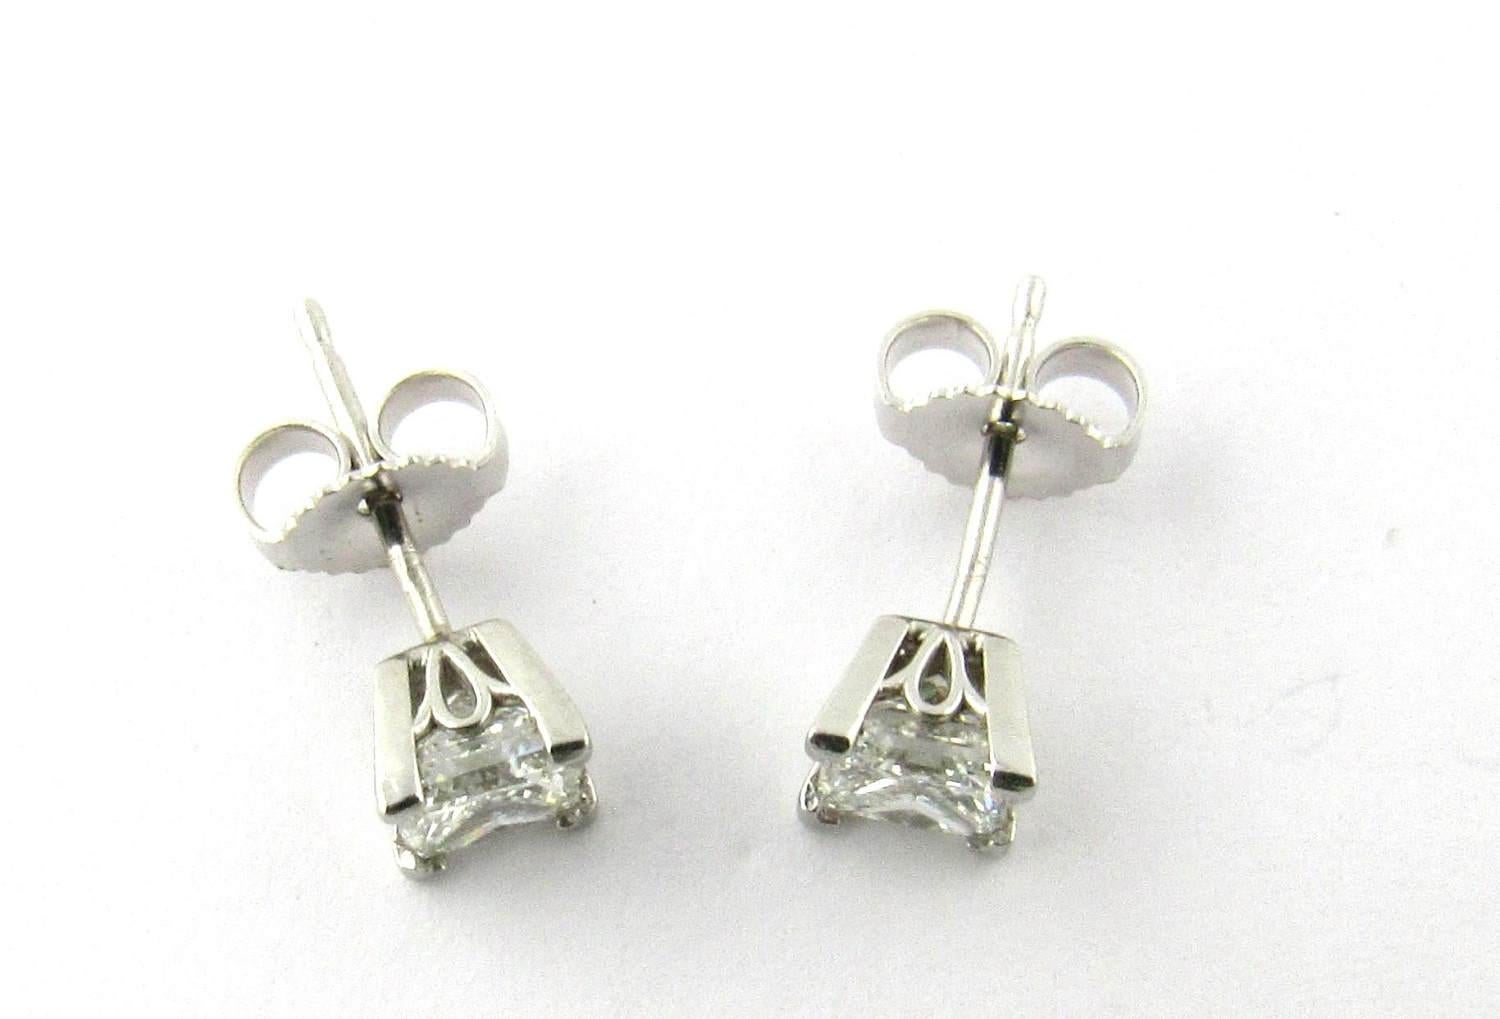 .80 carat diamond earrings